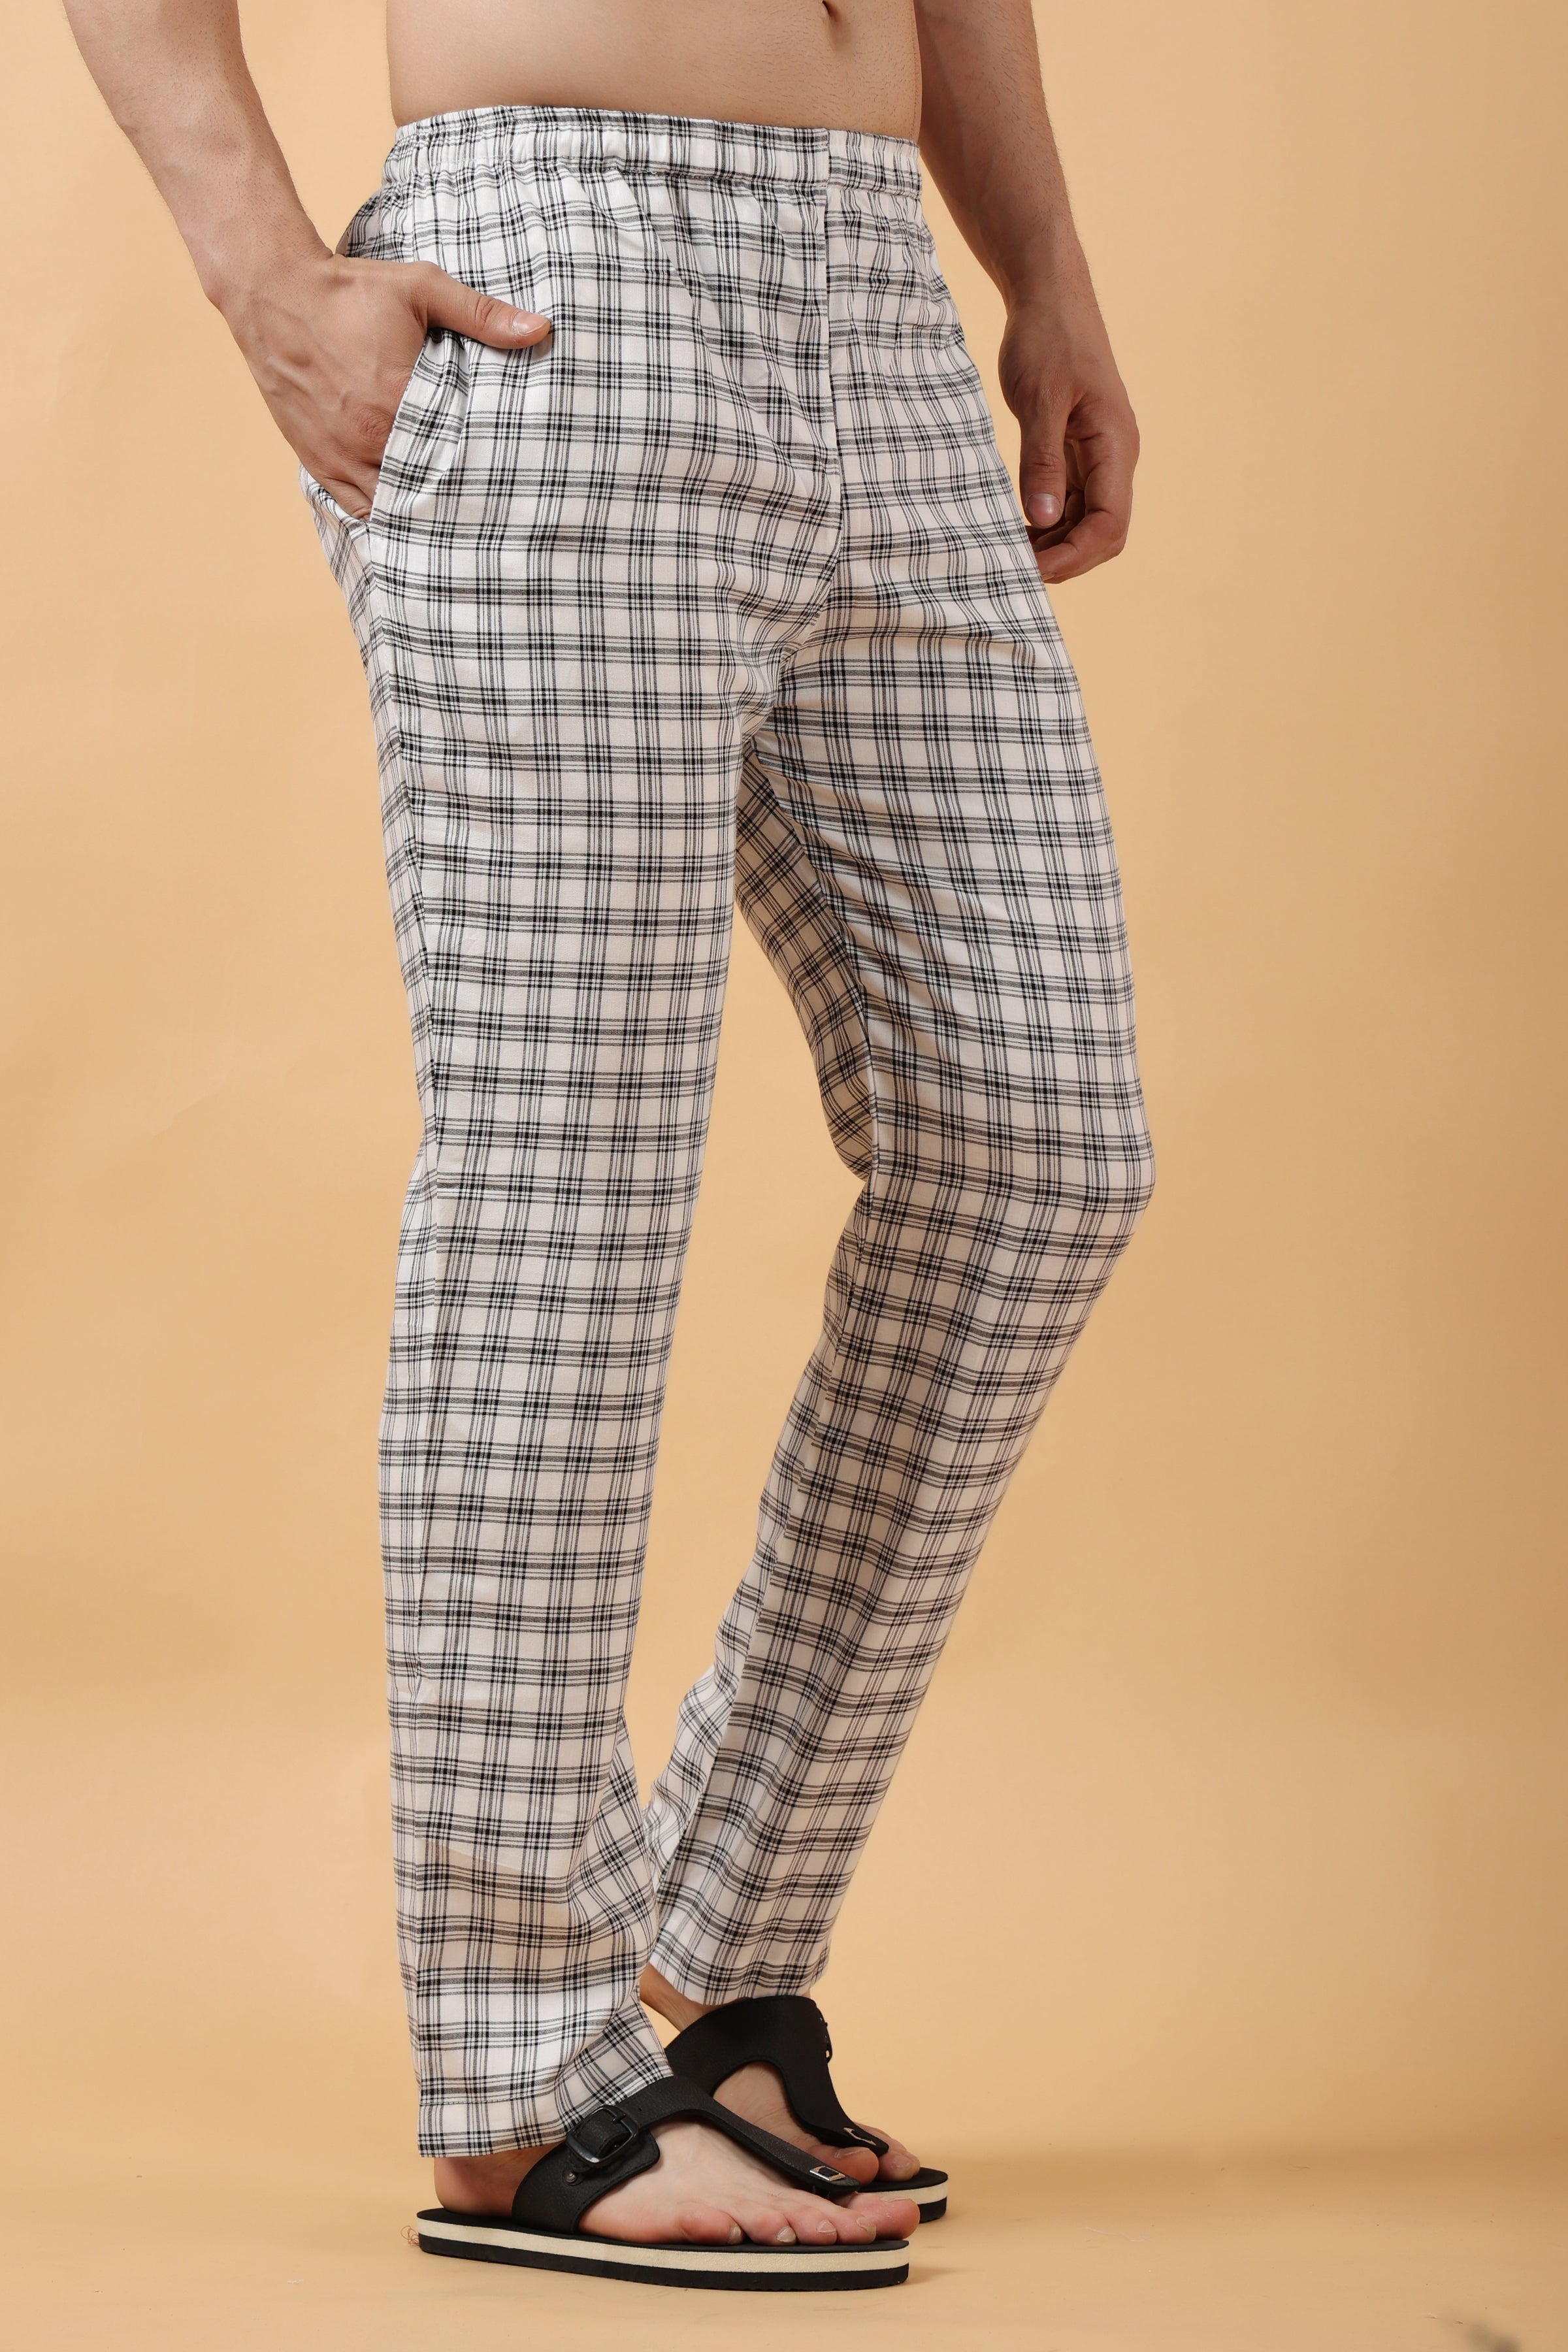 followme Mens Pajama Pants Pajamas for Men (Black White Buffalo Plaid,  Medium) - Walmart.com